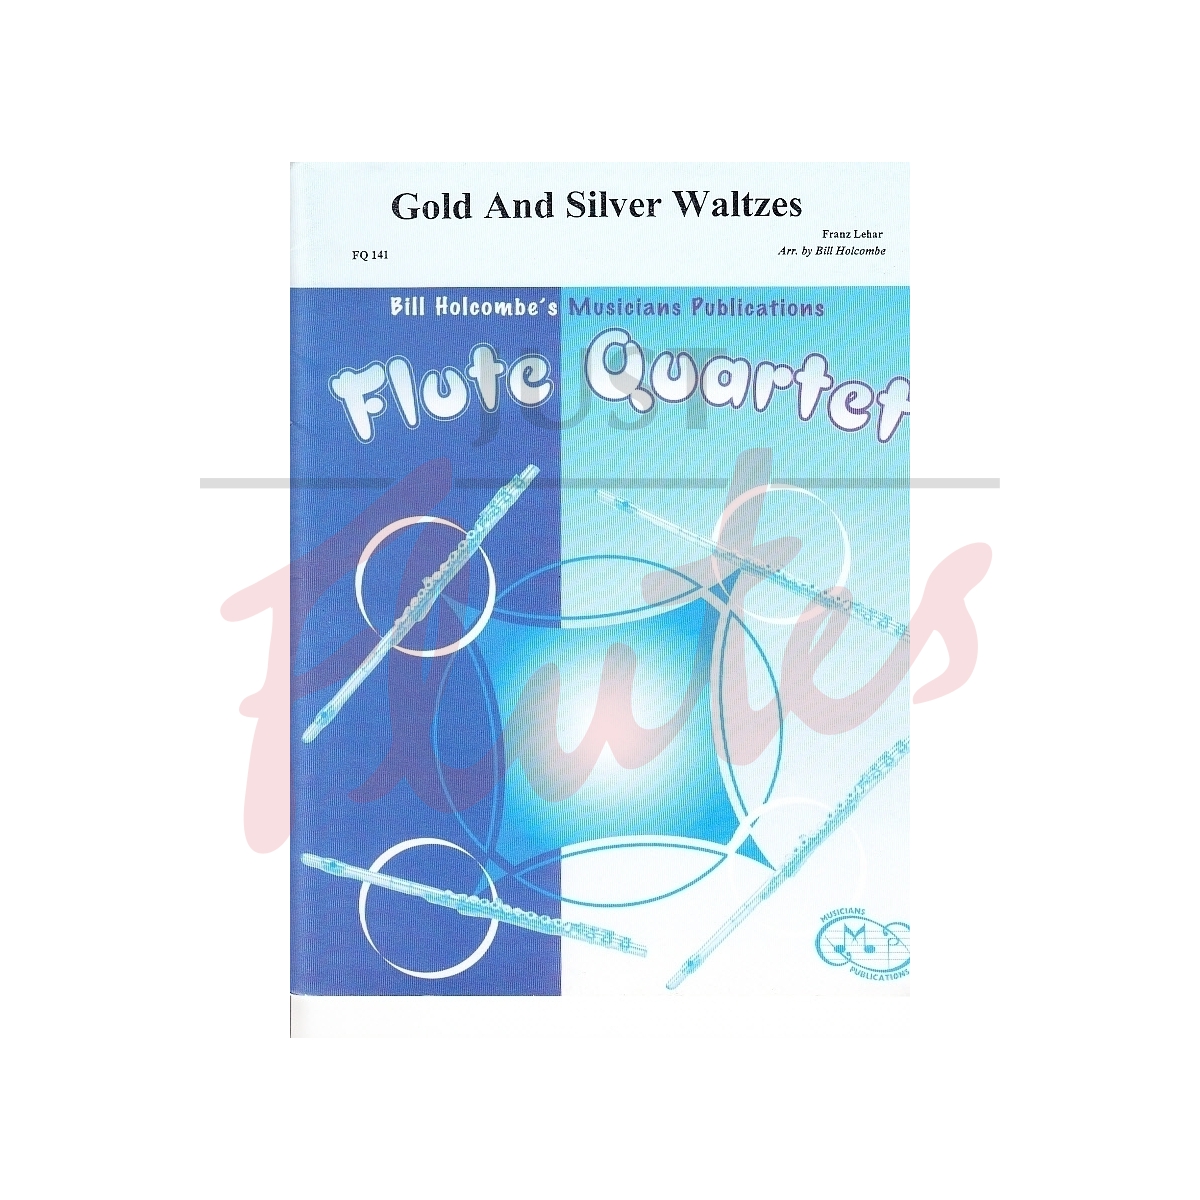 Gold and Silver Waltzes [Flute Quartet]